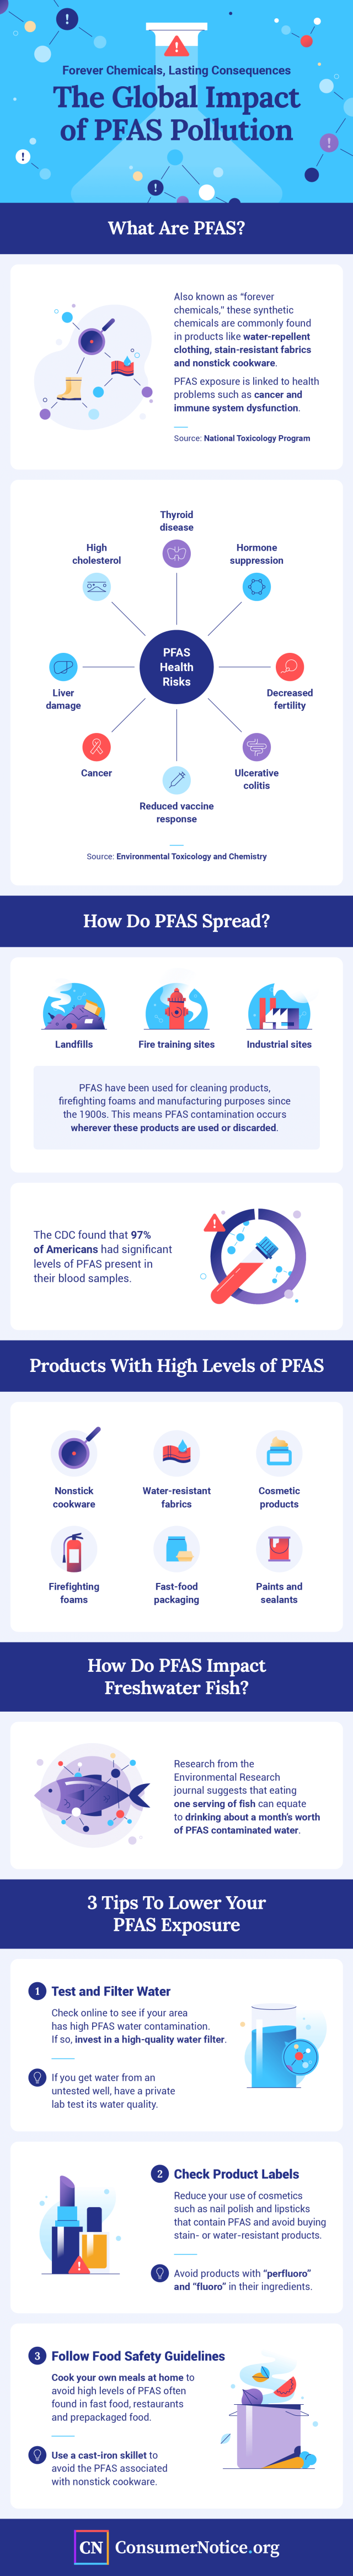 Infographic explaining the global impact of PFAS.